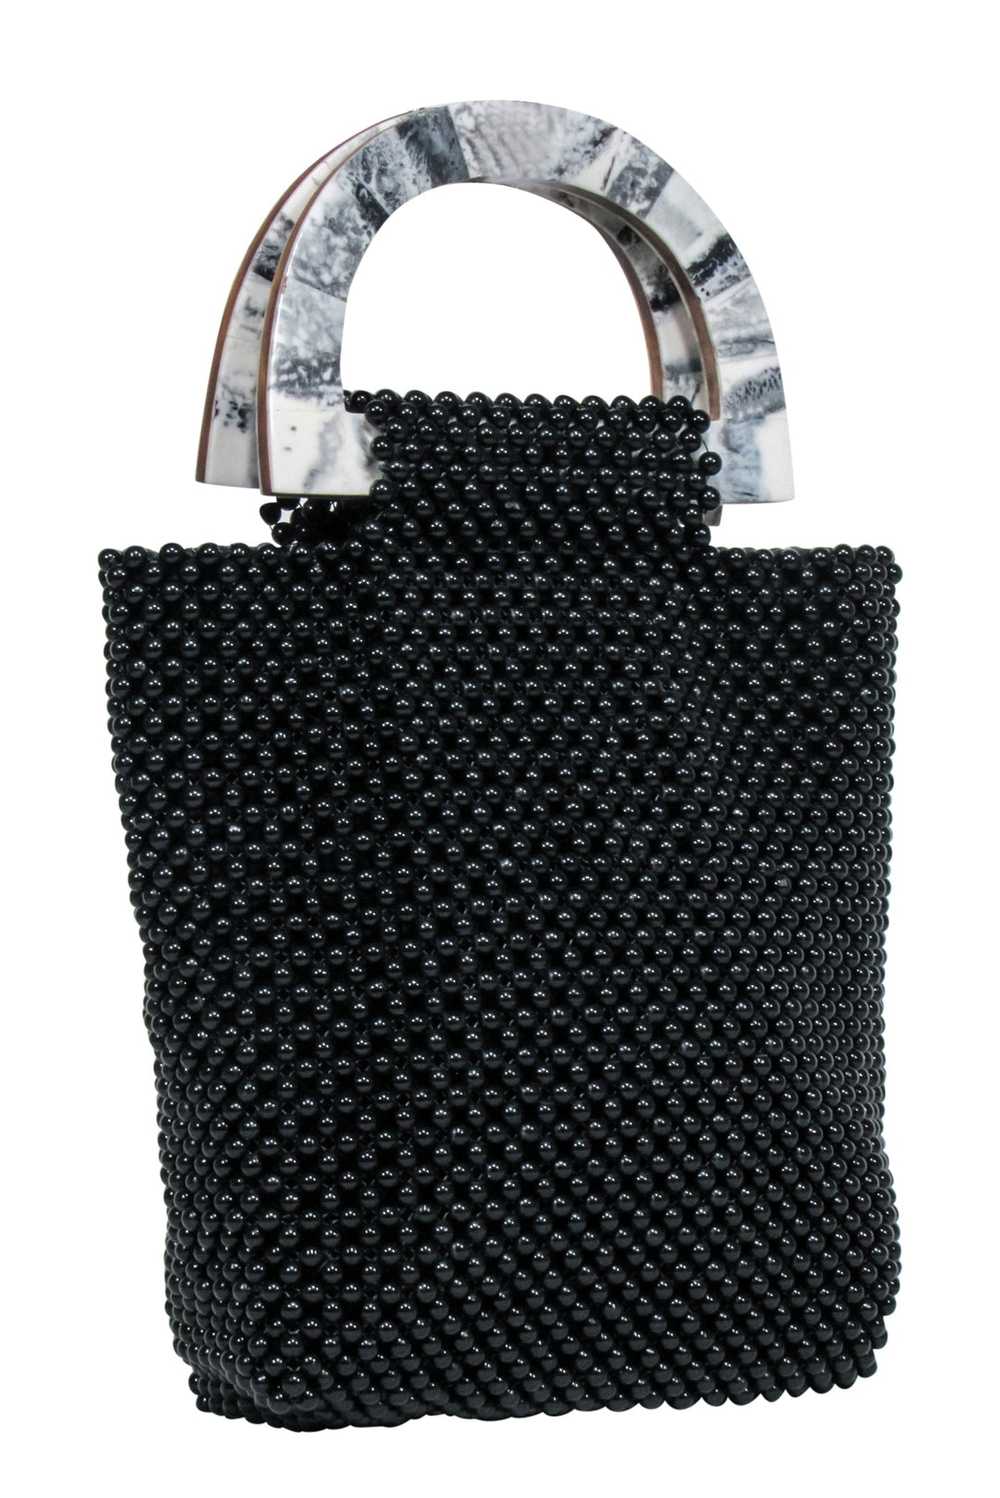 Cleobella - Black Beaded Handbag w/ Marble Handles - image 2